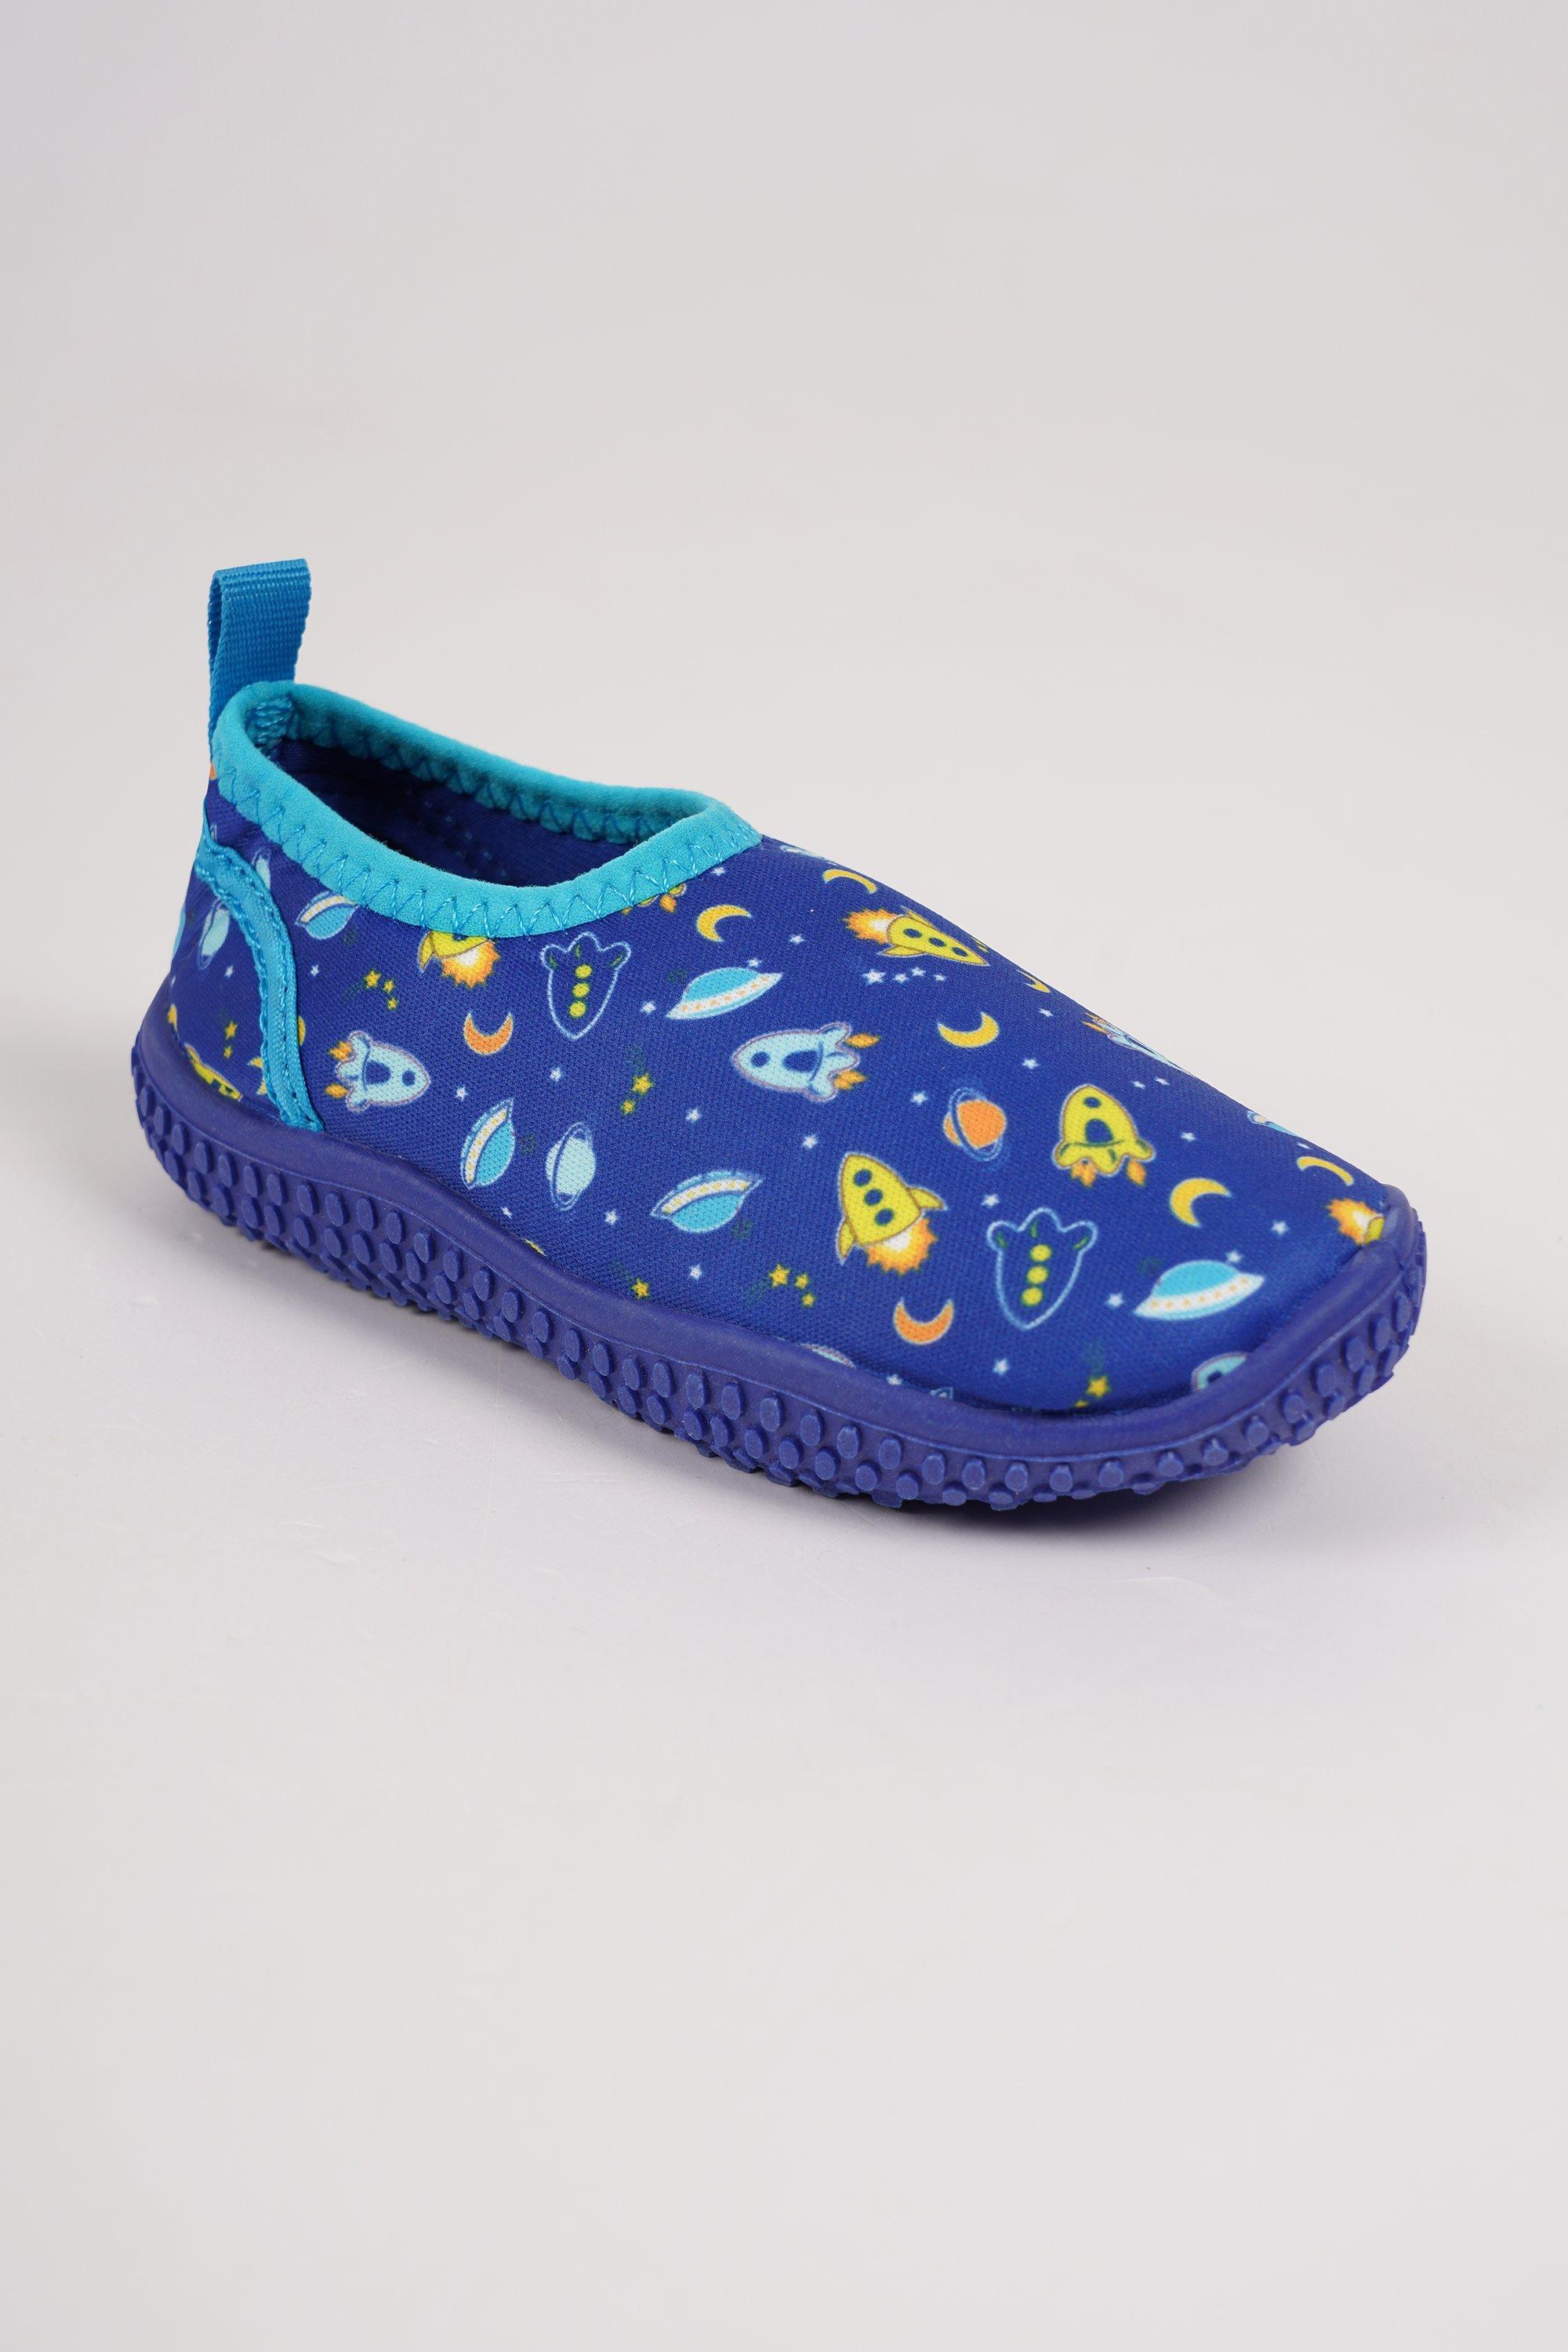 iPlay Toddler Girls Boys Kids Water Swim Shoes Aqua Socks Pool Beach -  15771